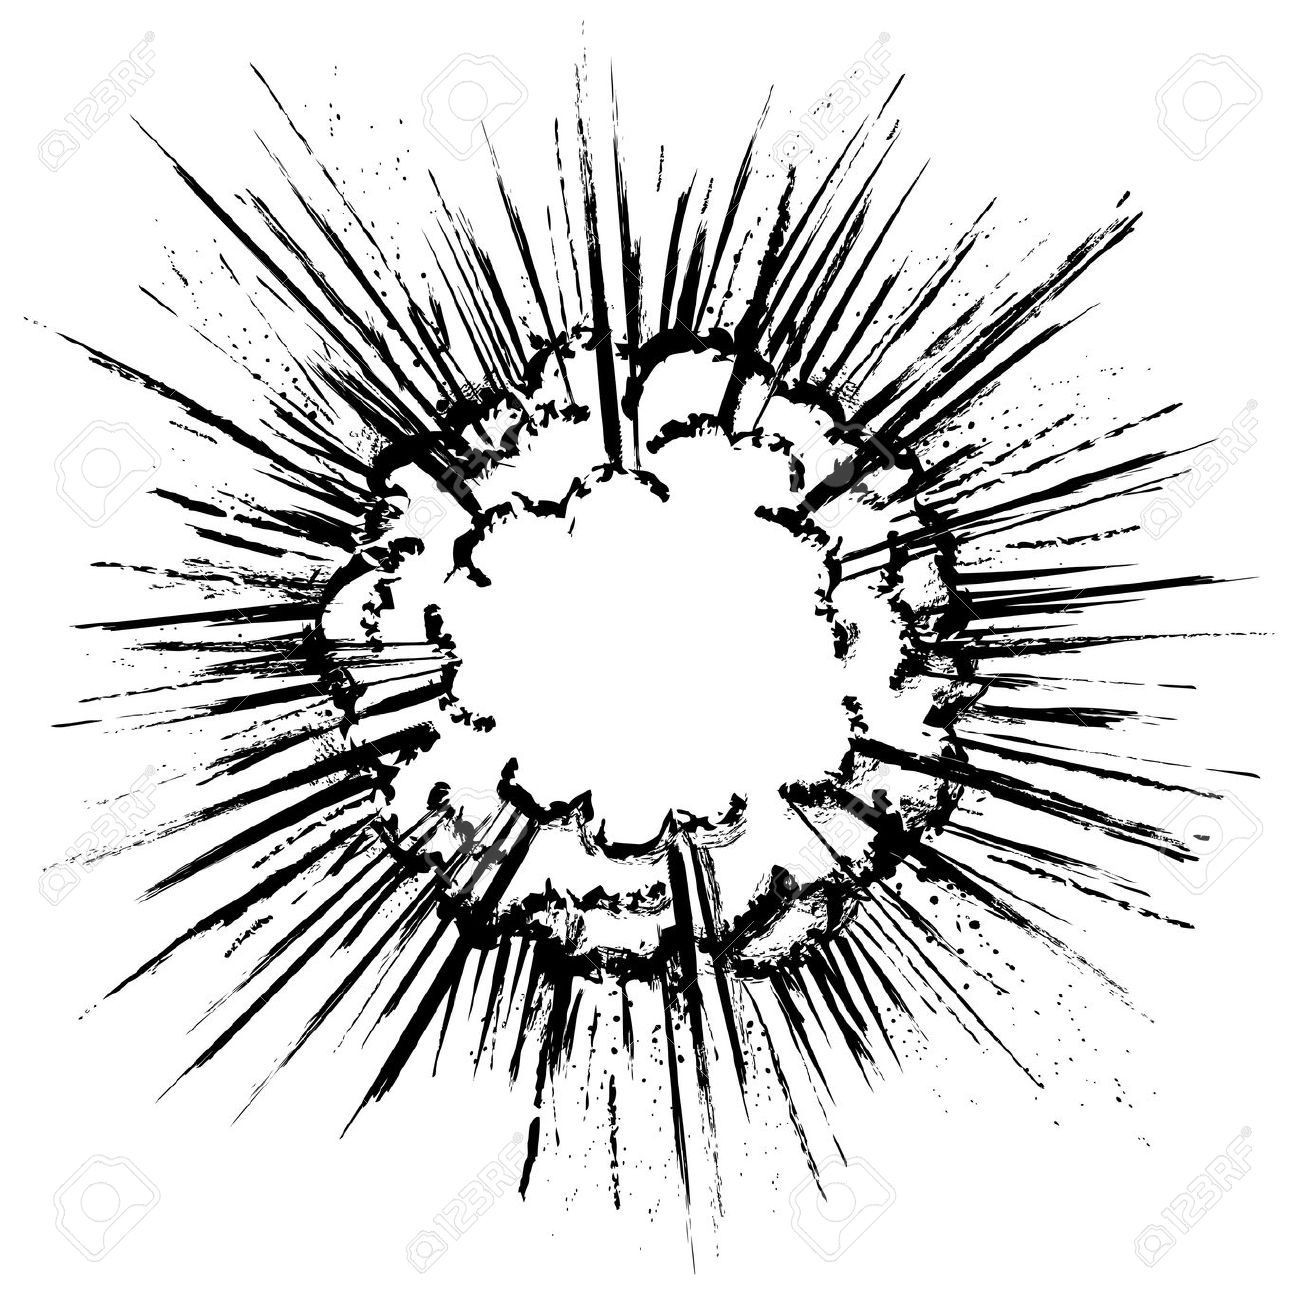 Explosion clip art happy. Bomb clipart black and white